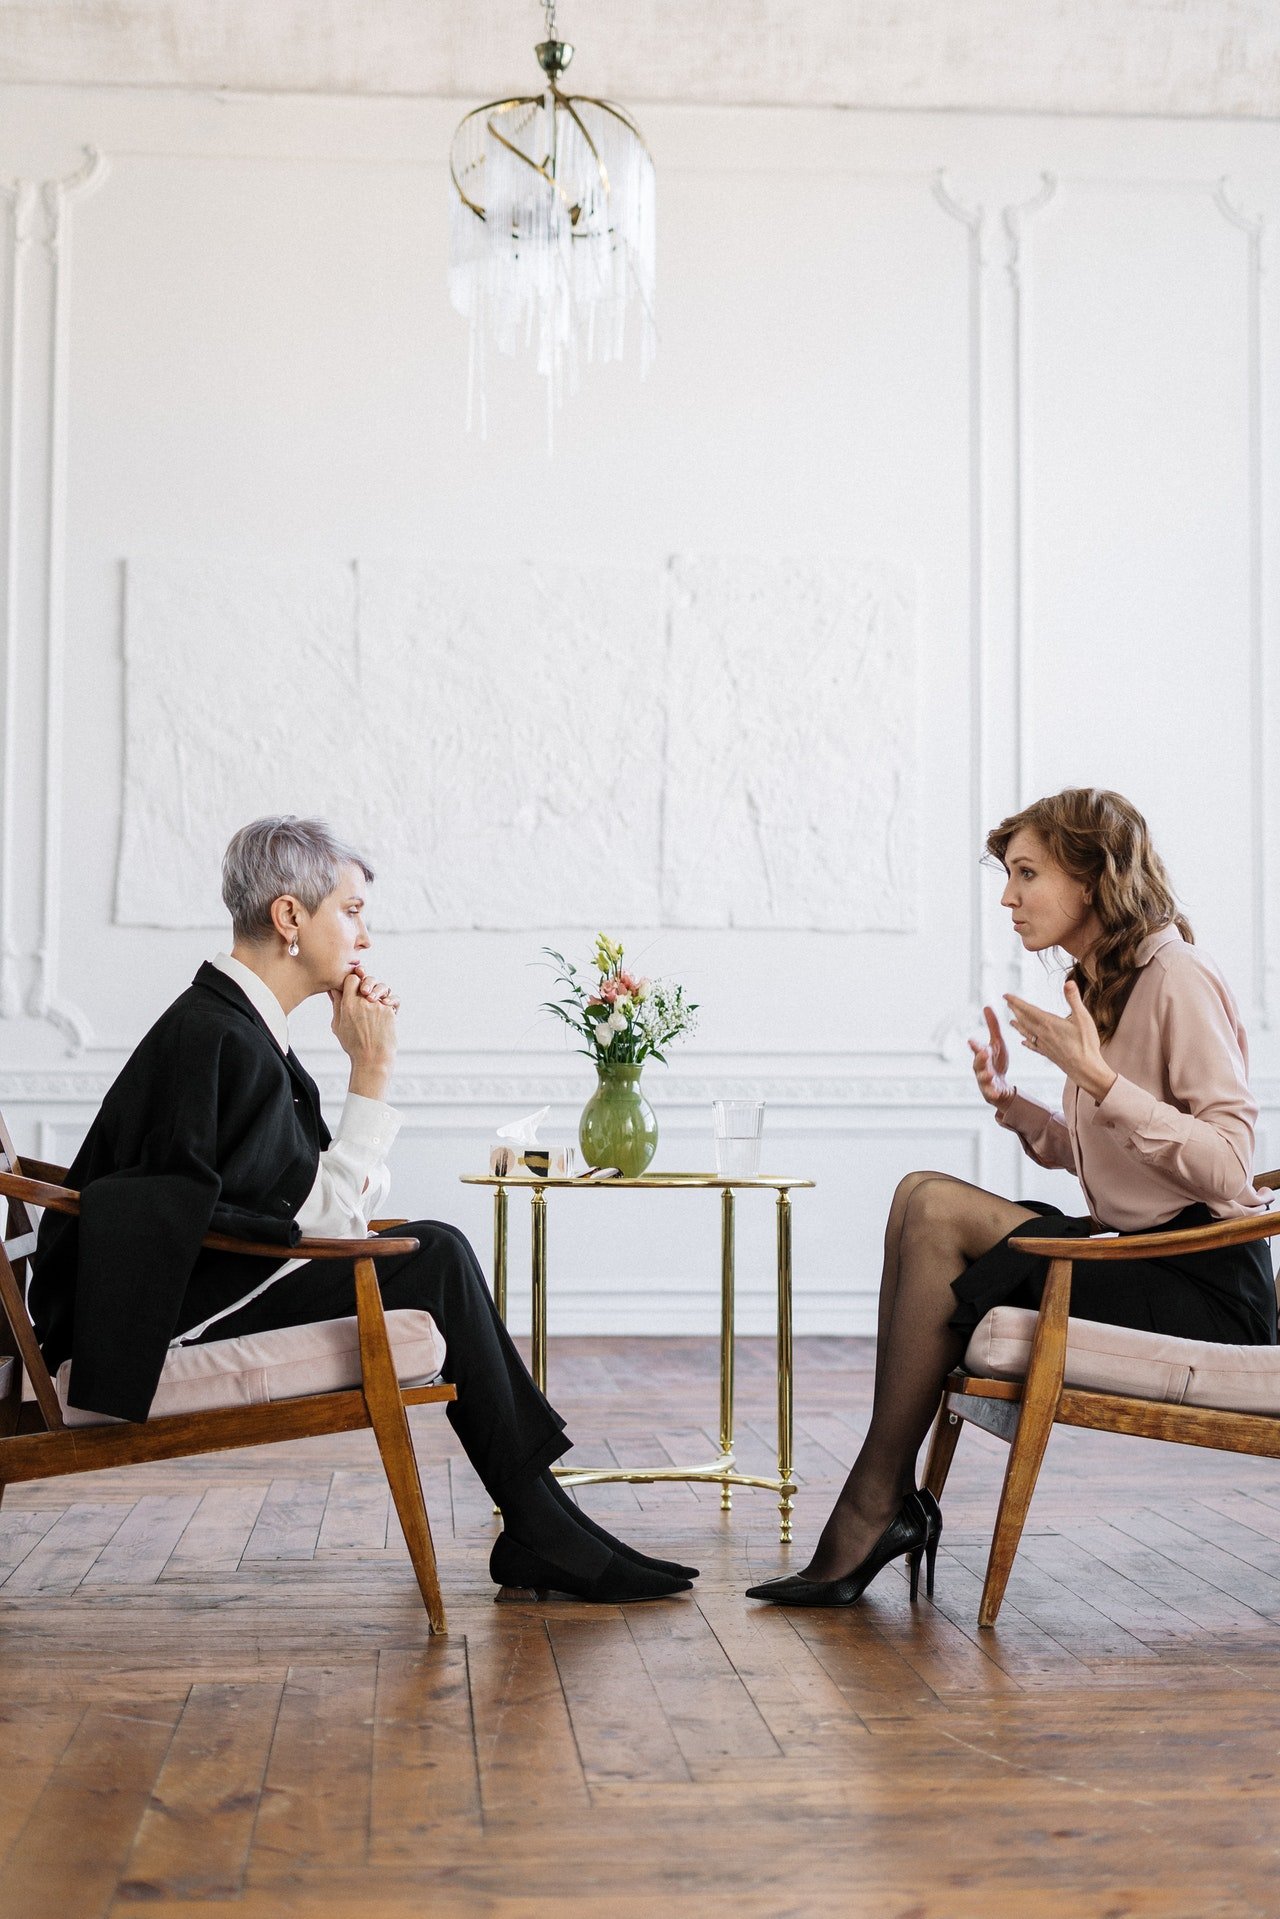 Mujeres conversando. | Foto: Pexels